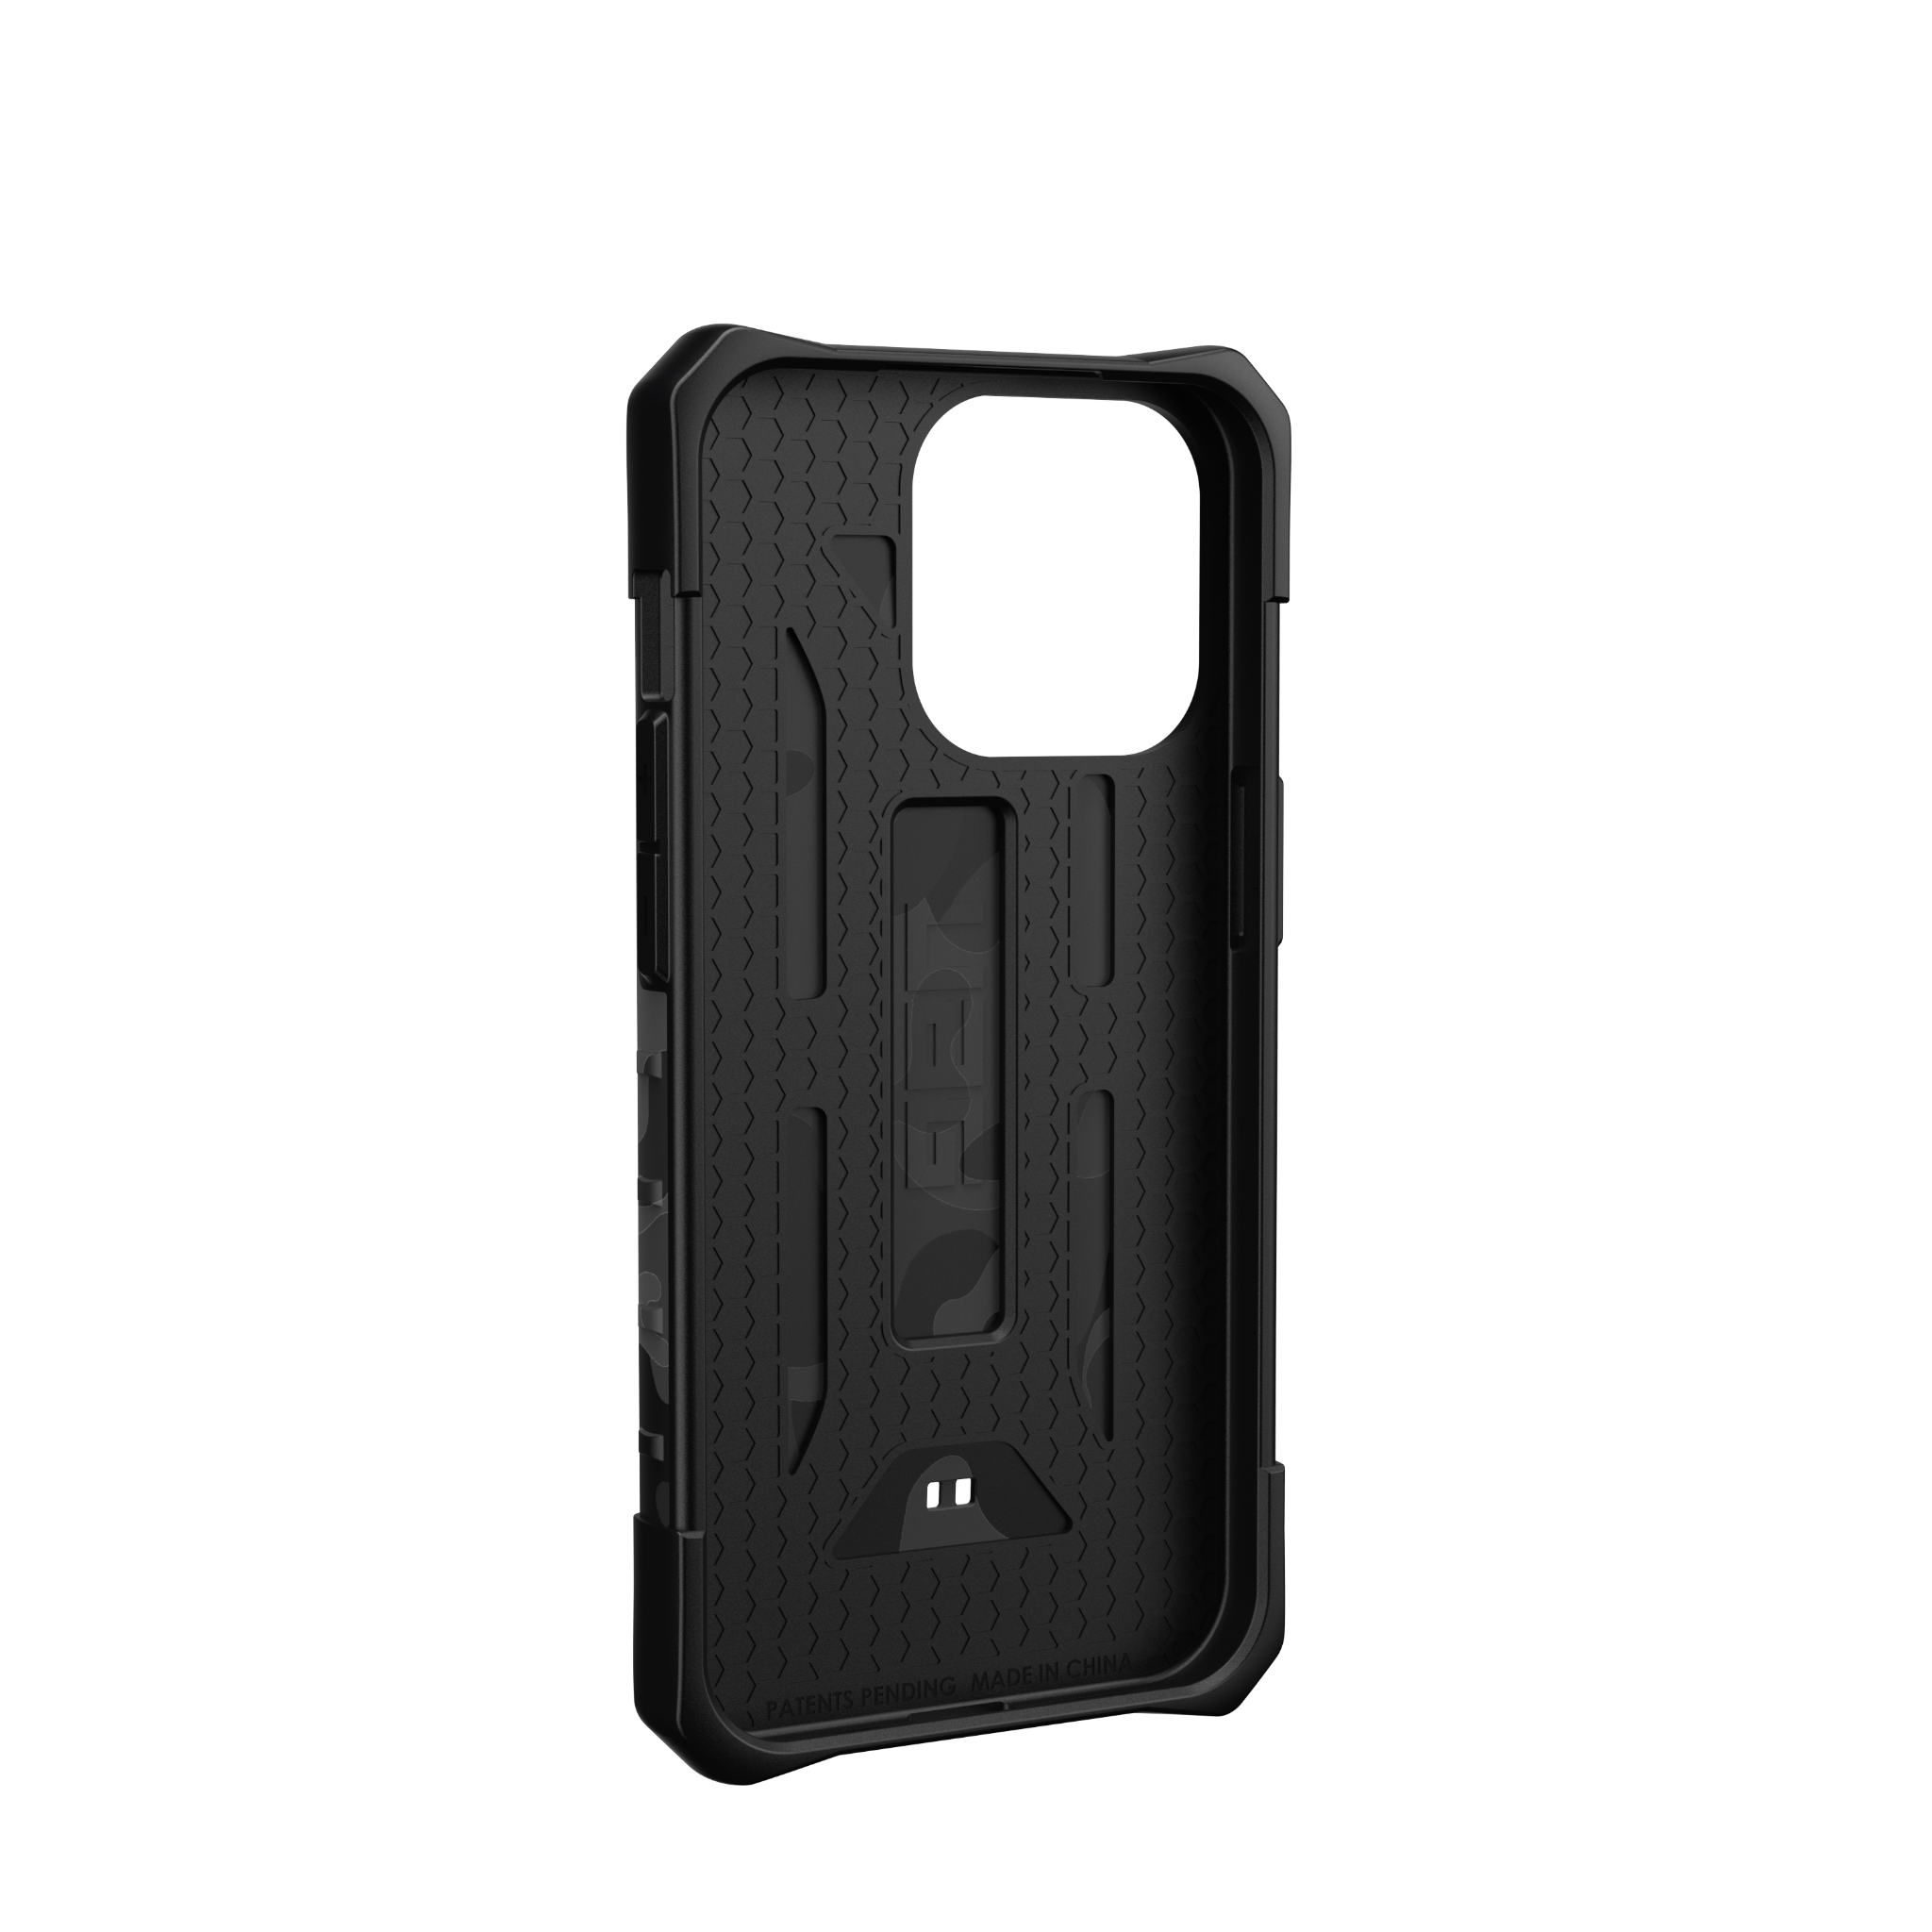  Ốp lưng Pathfinder SE cho iPhone 13 Pro [6.1 inch] 